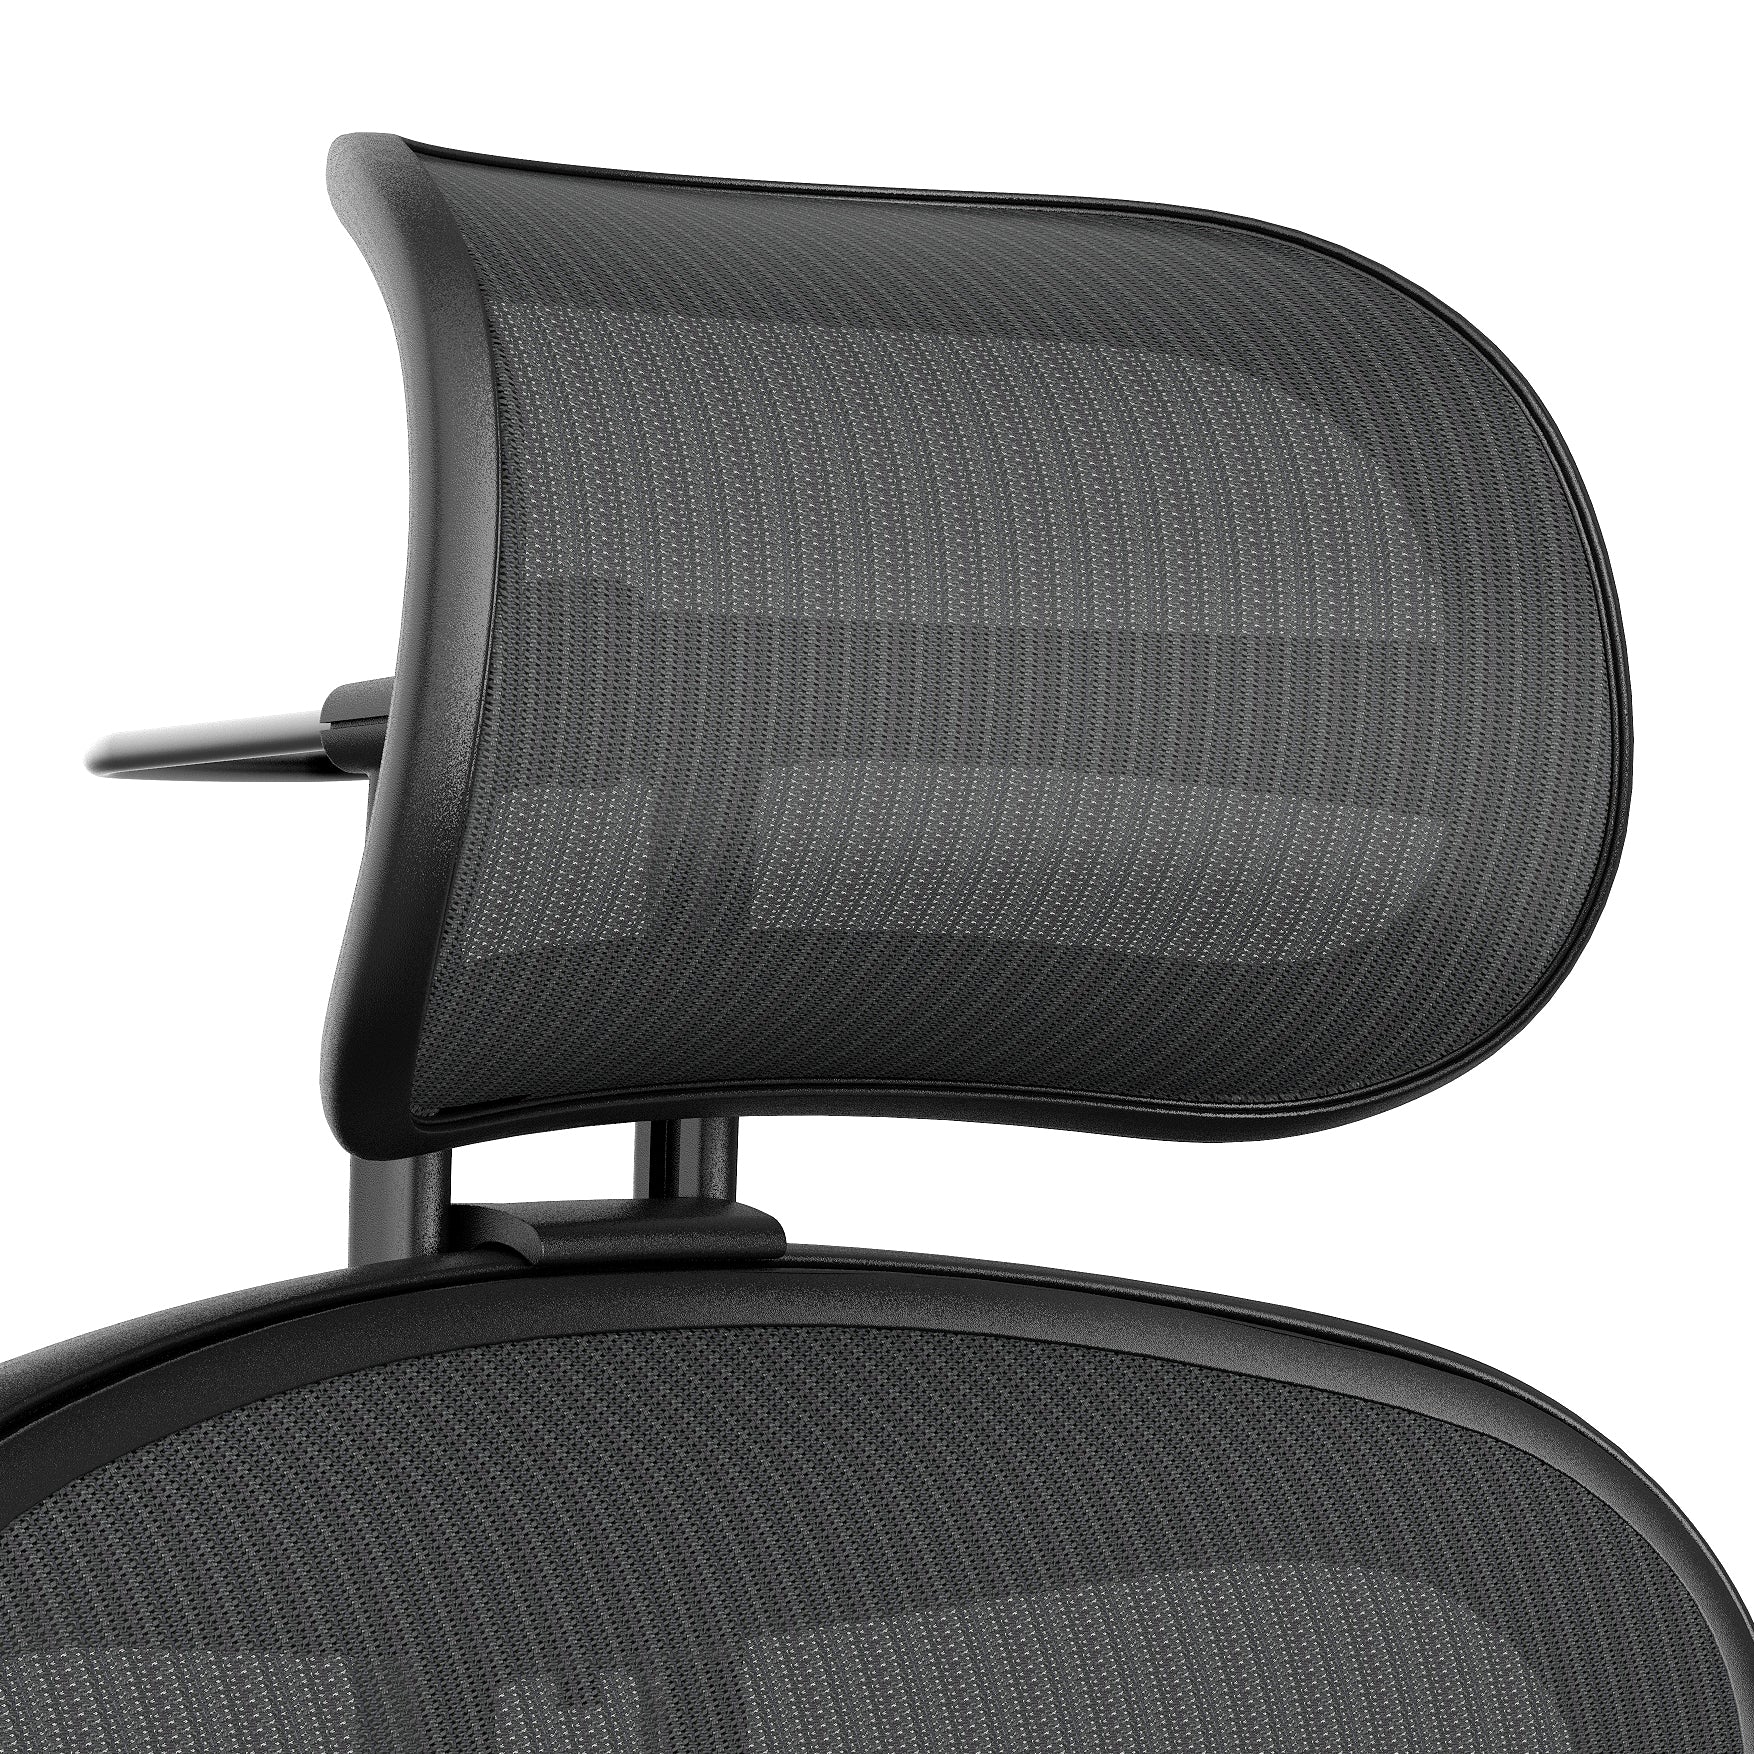 Headrests for Aeron chair